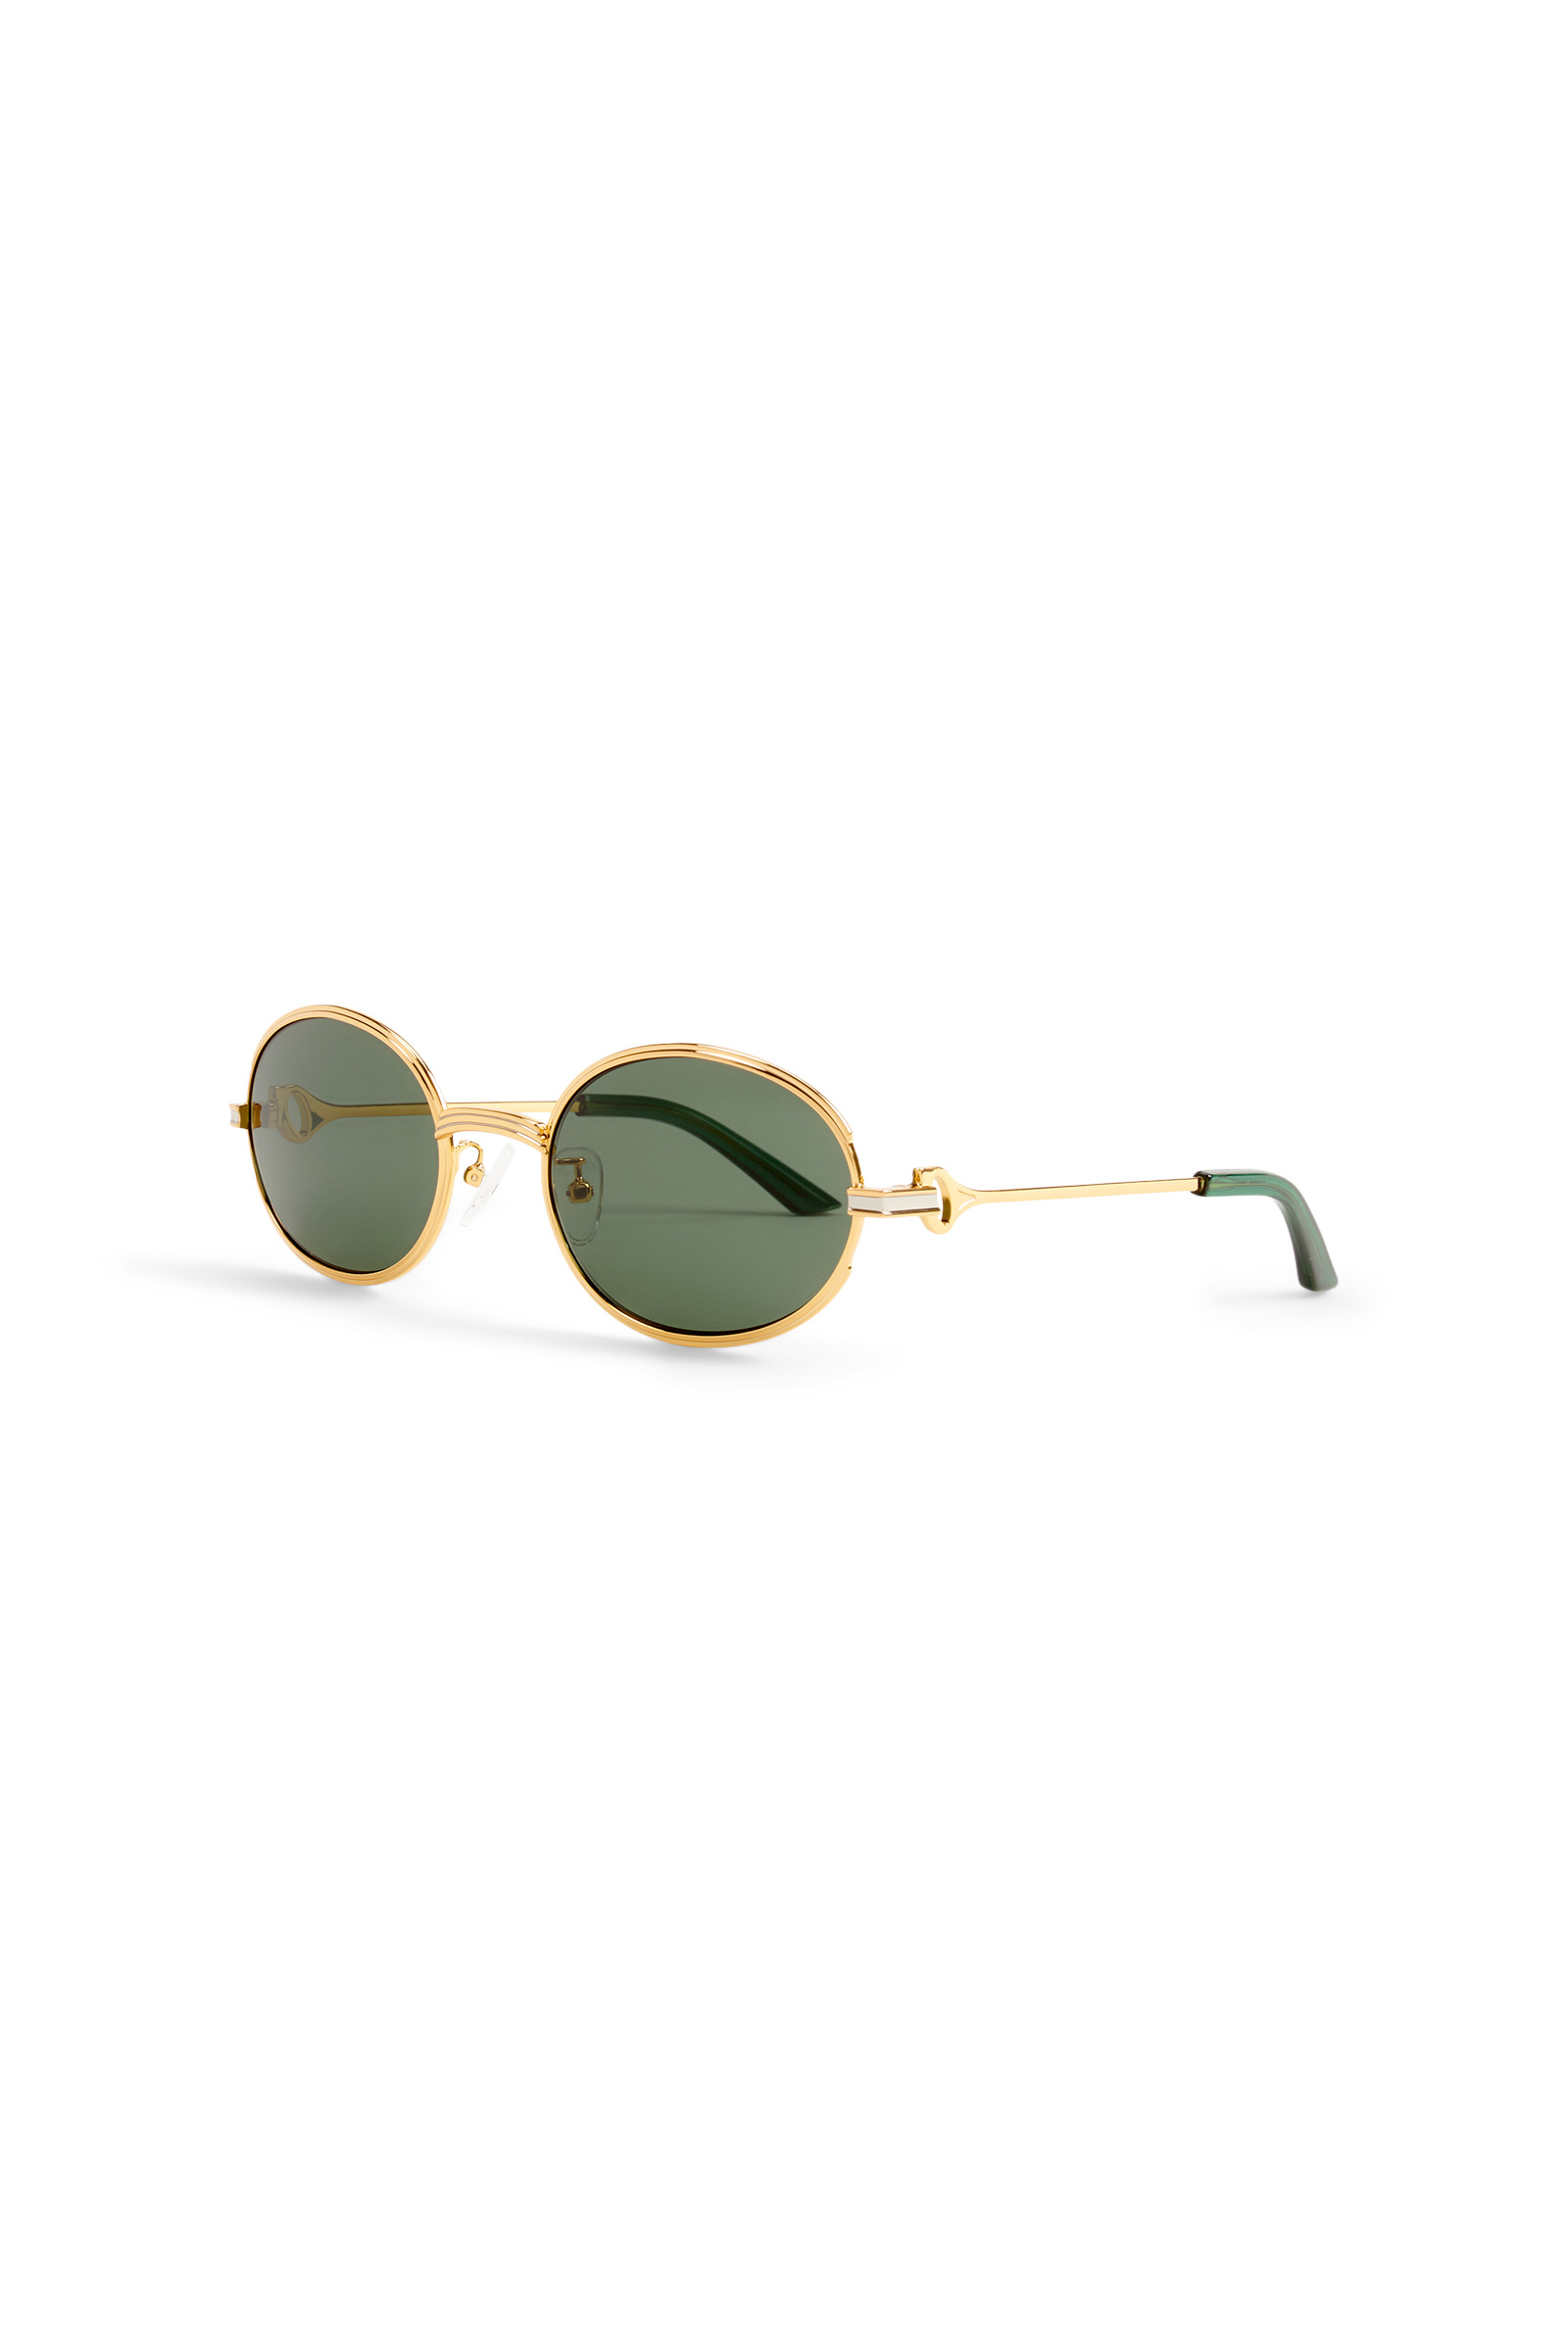 Green & Gold The Hero Sunglasses - 1